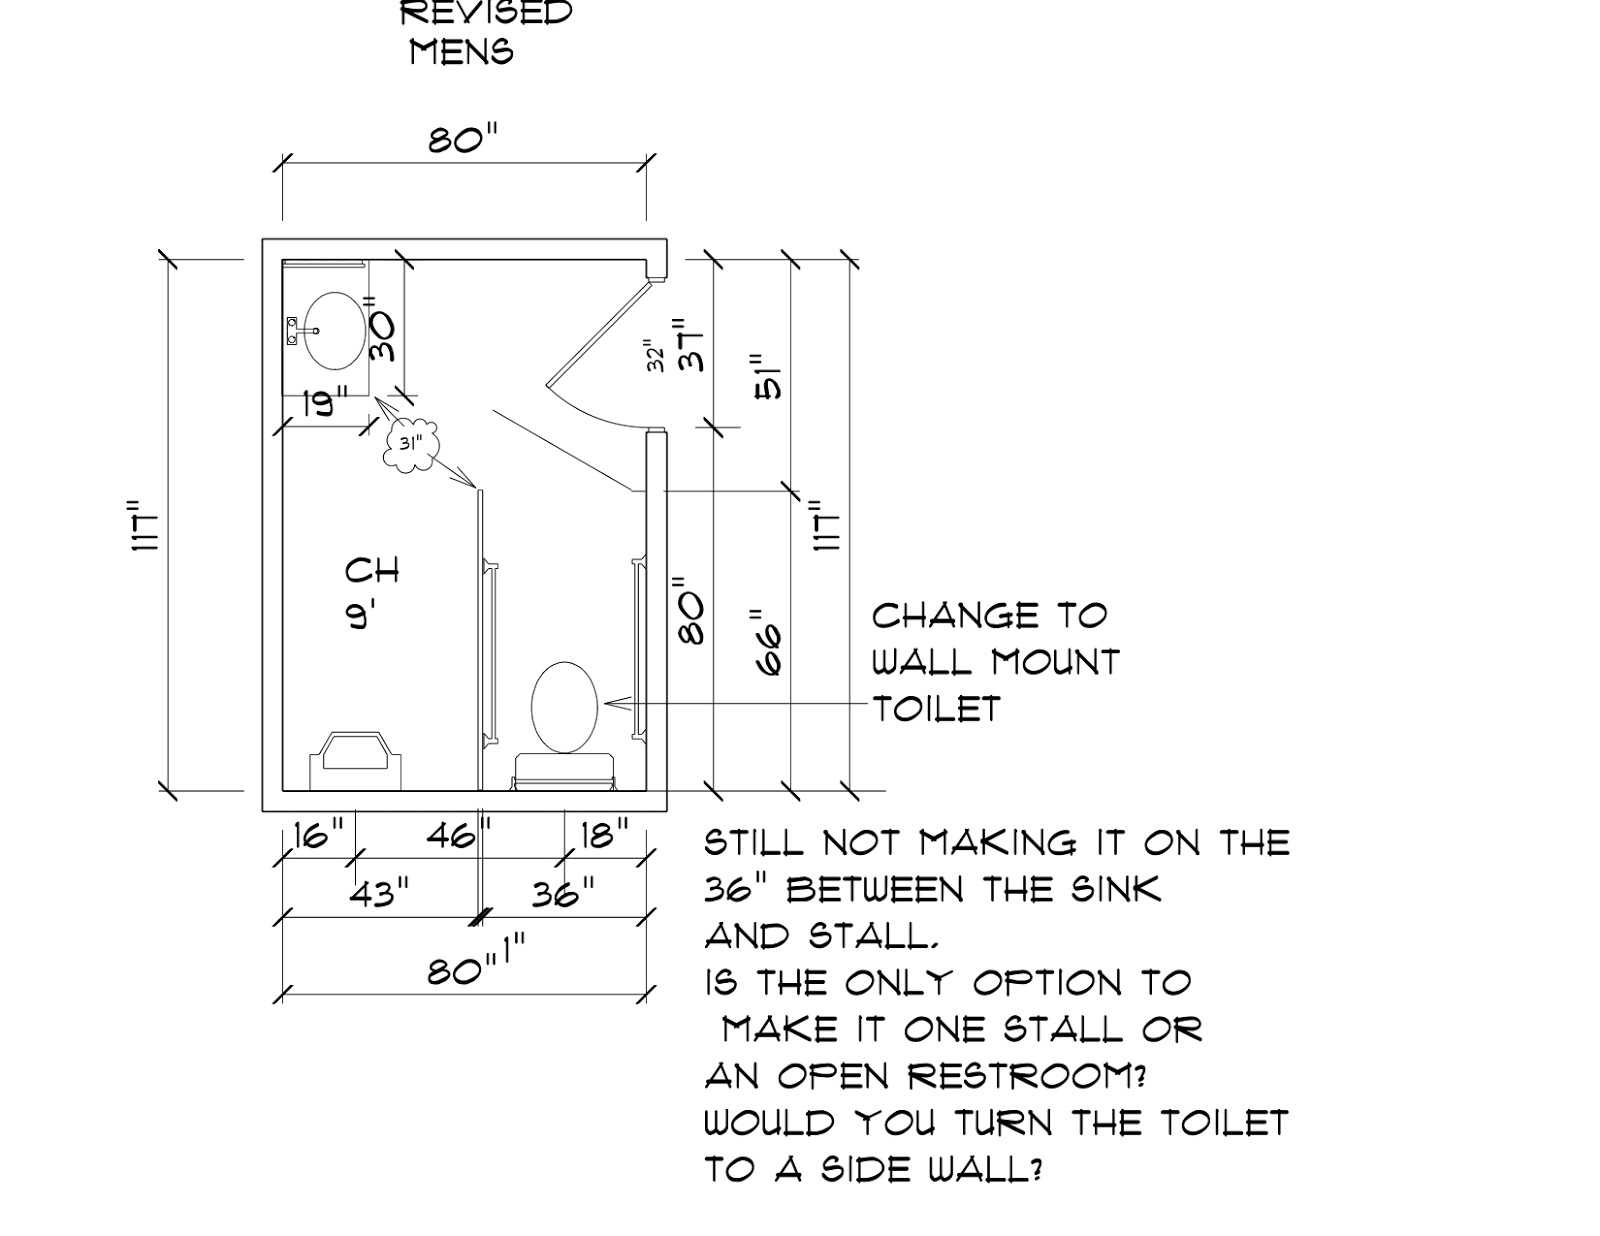 ADA Redesigning a Public Men's Bathroom based on ADA